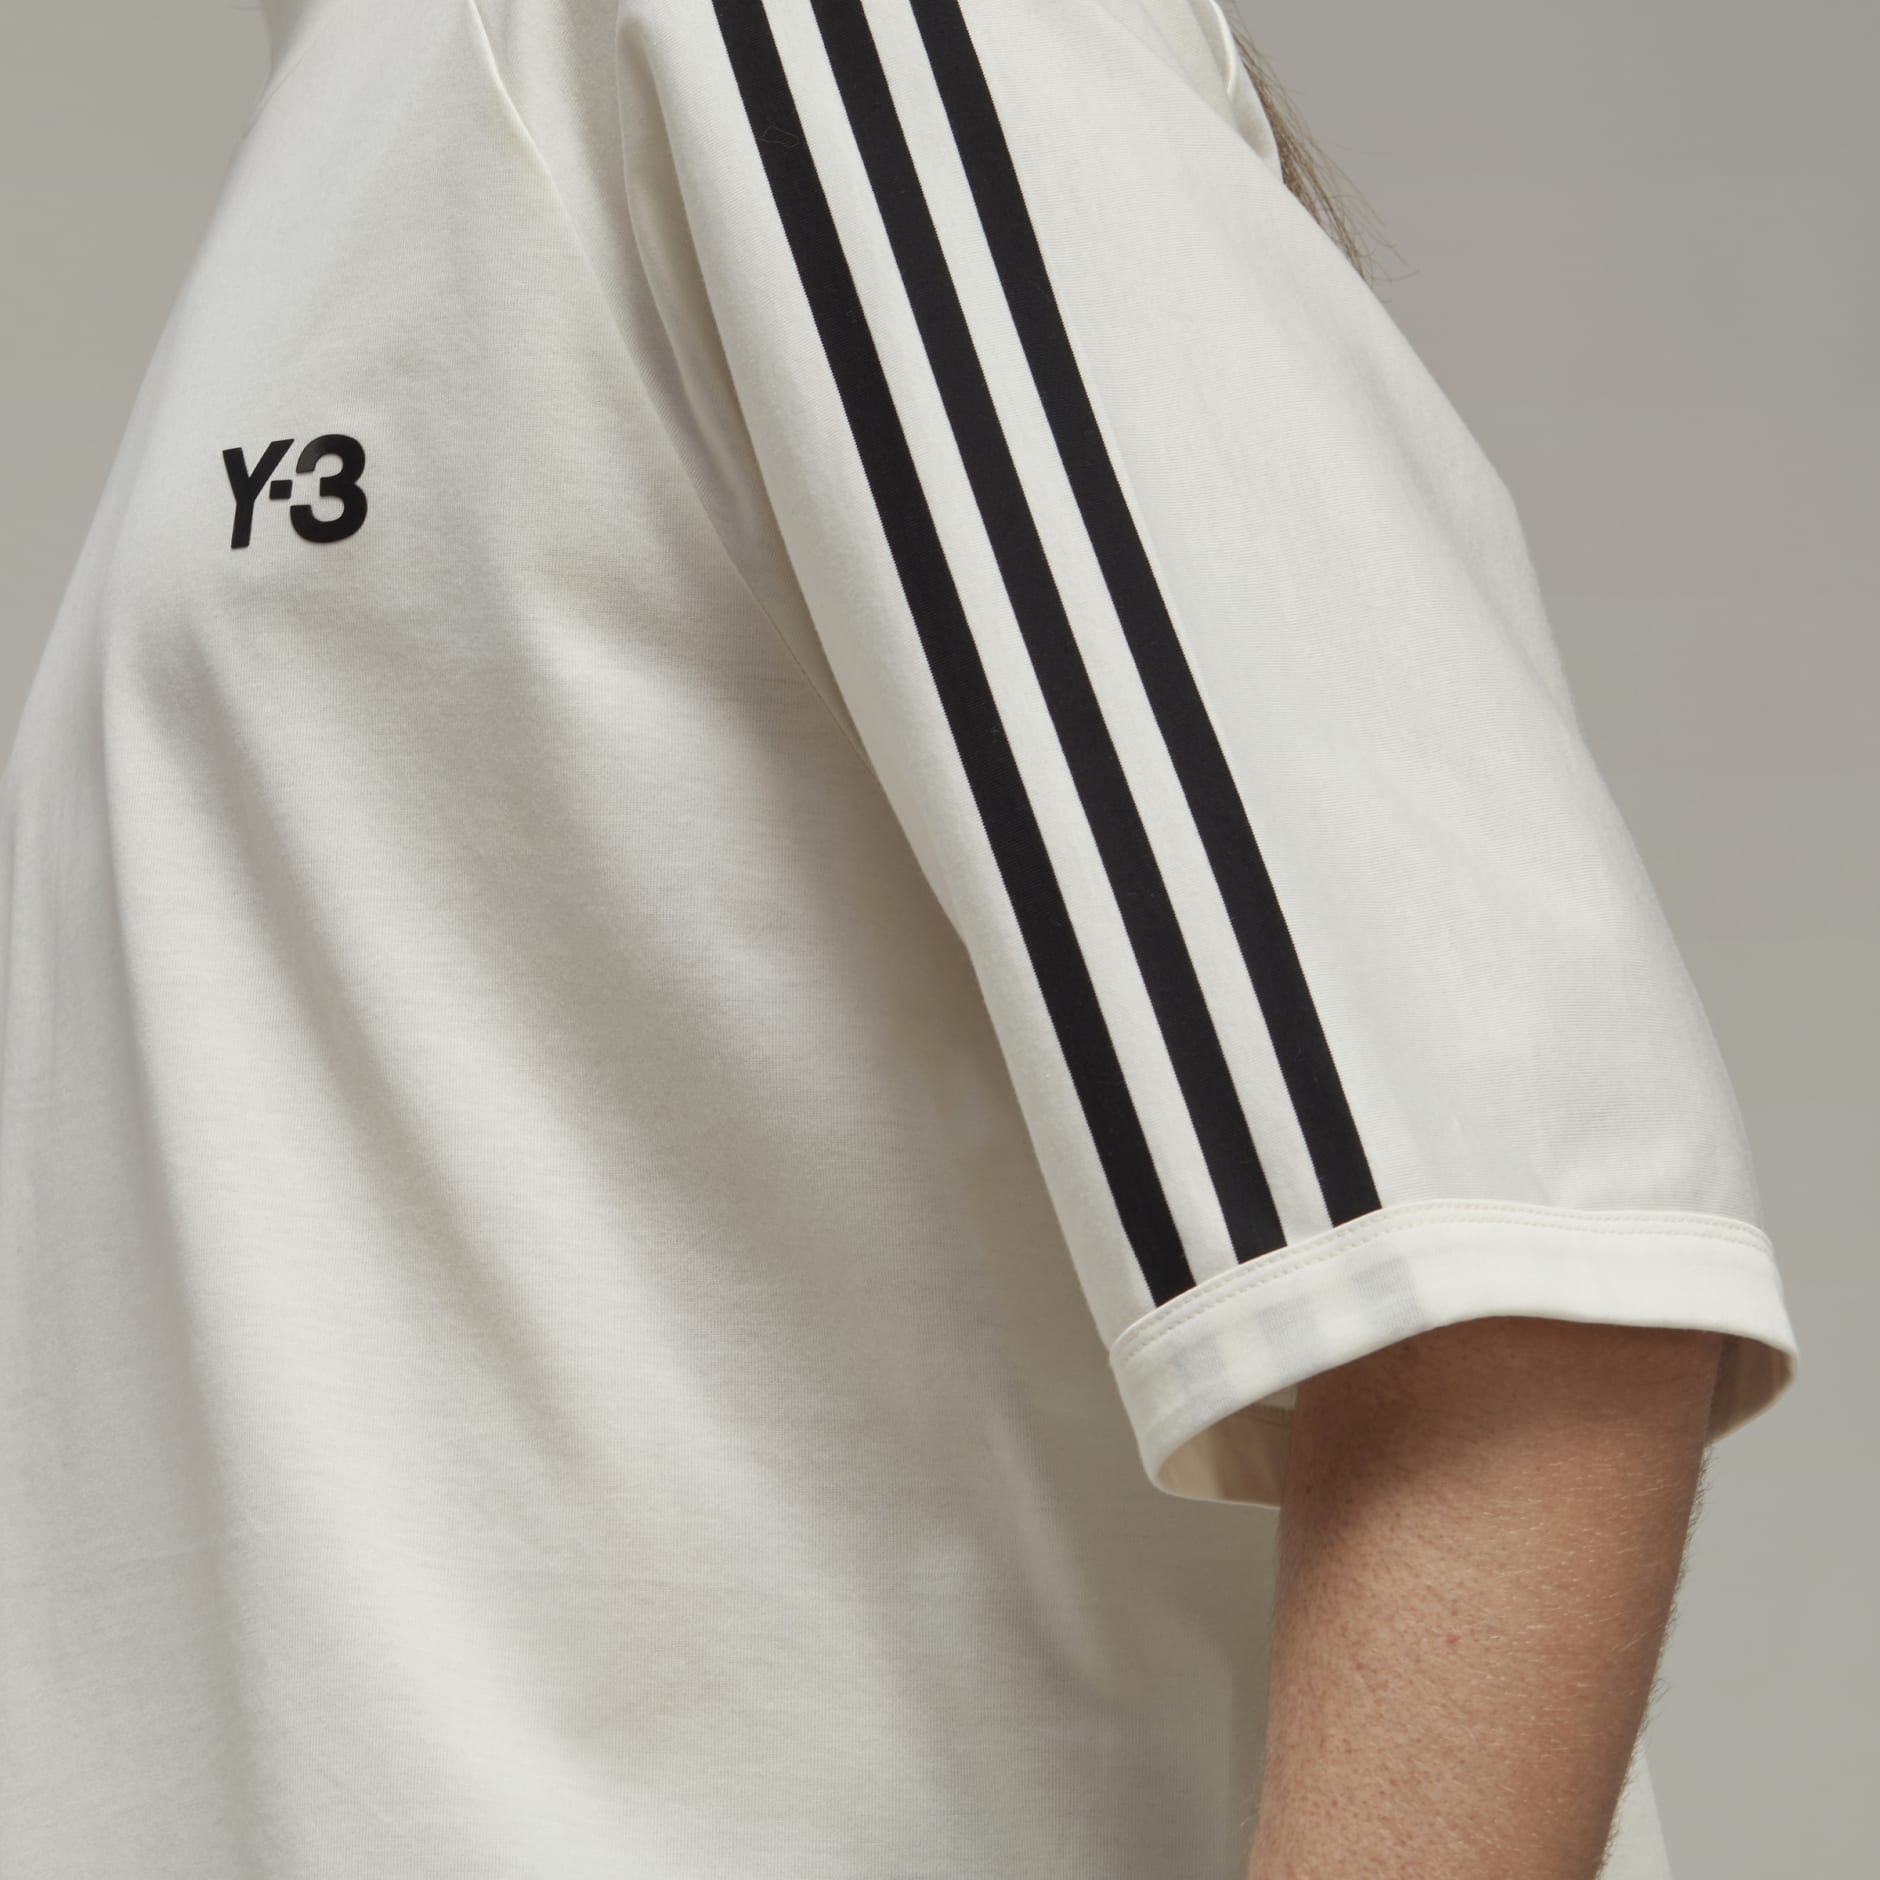 Y-3 | 3-Stripes Short LK White Tee - adidas adidas Sleeve